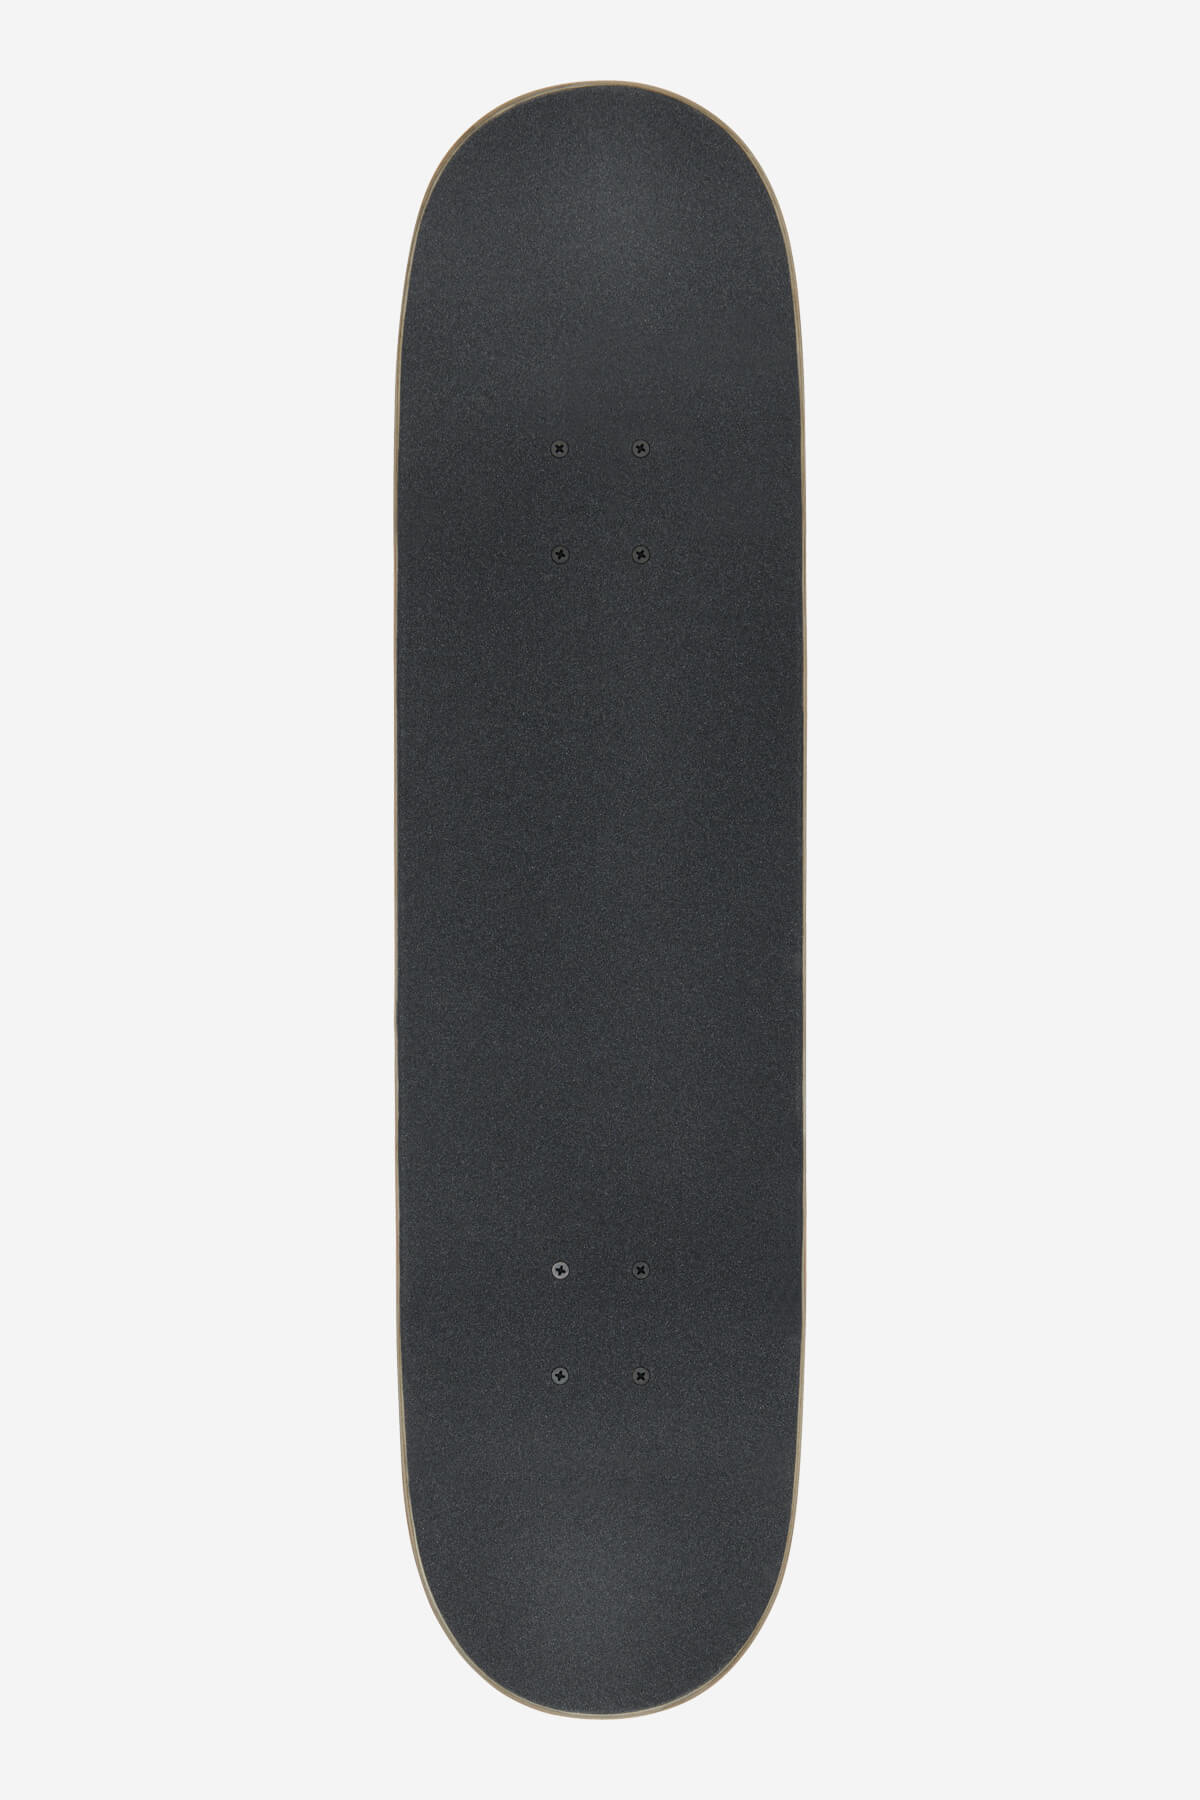 goodstock gunmetal 8.25" complet skateboard